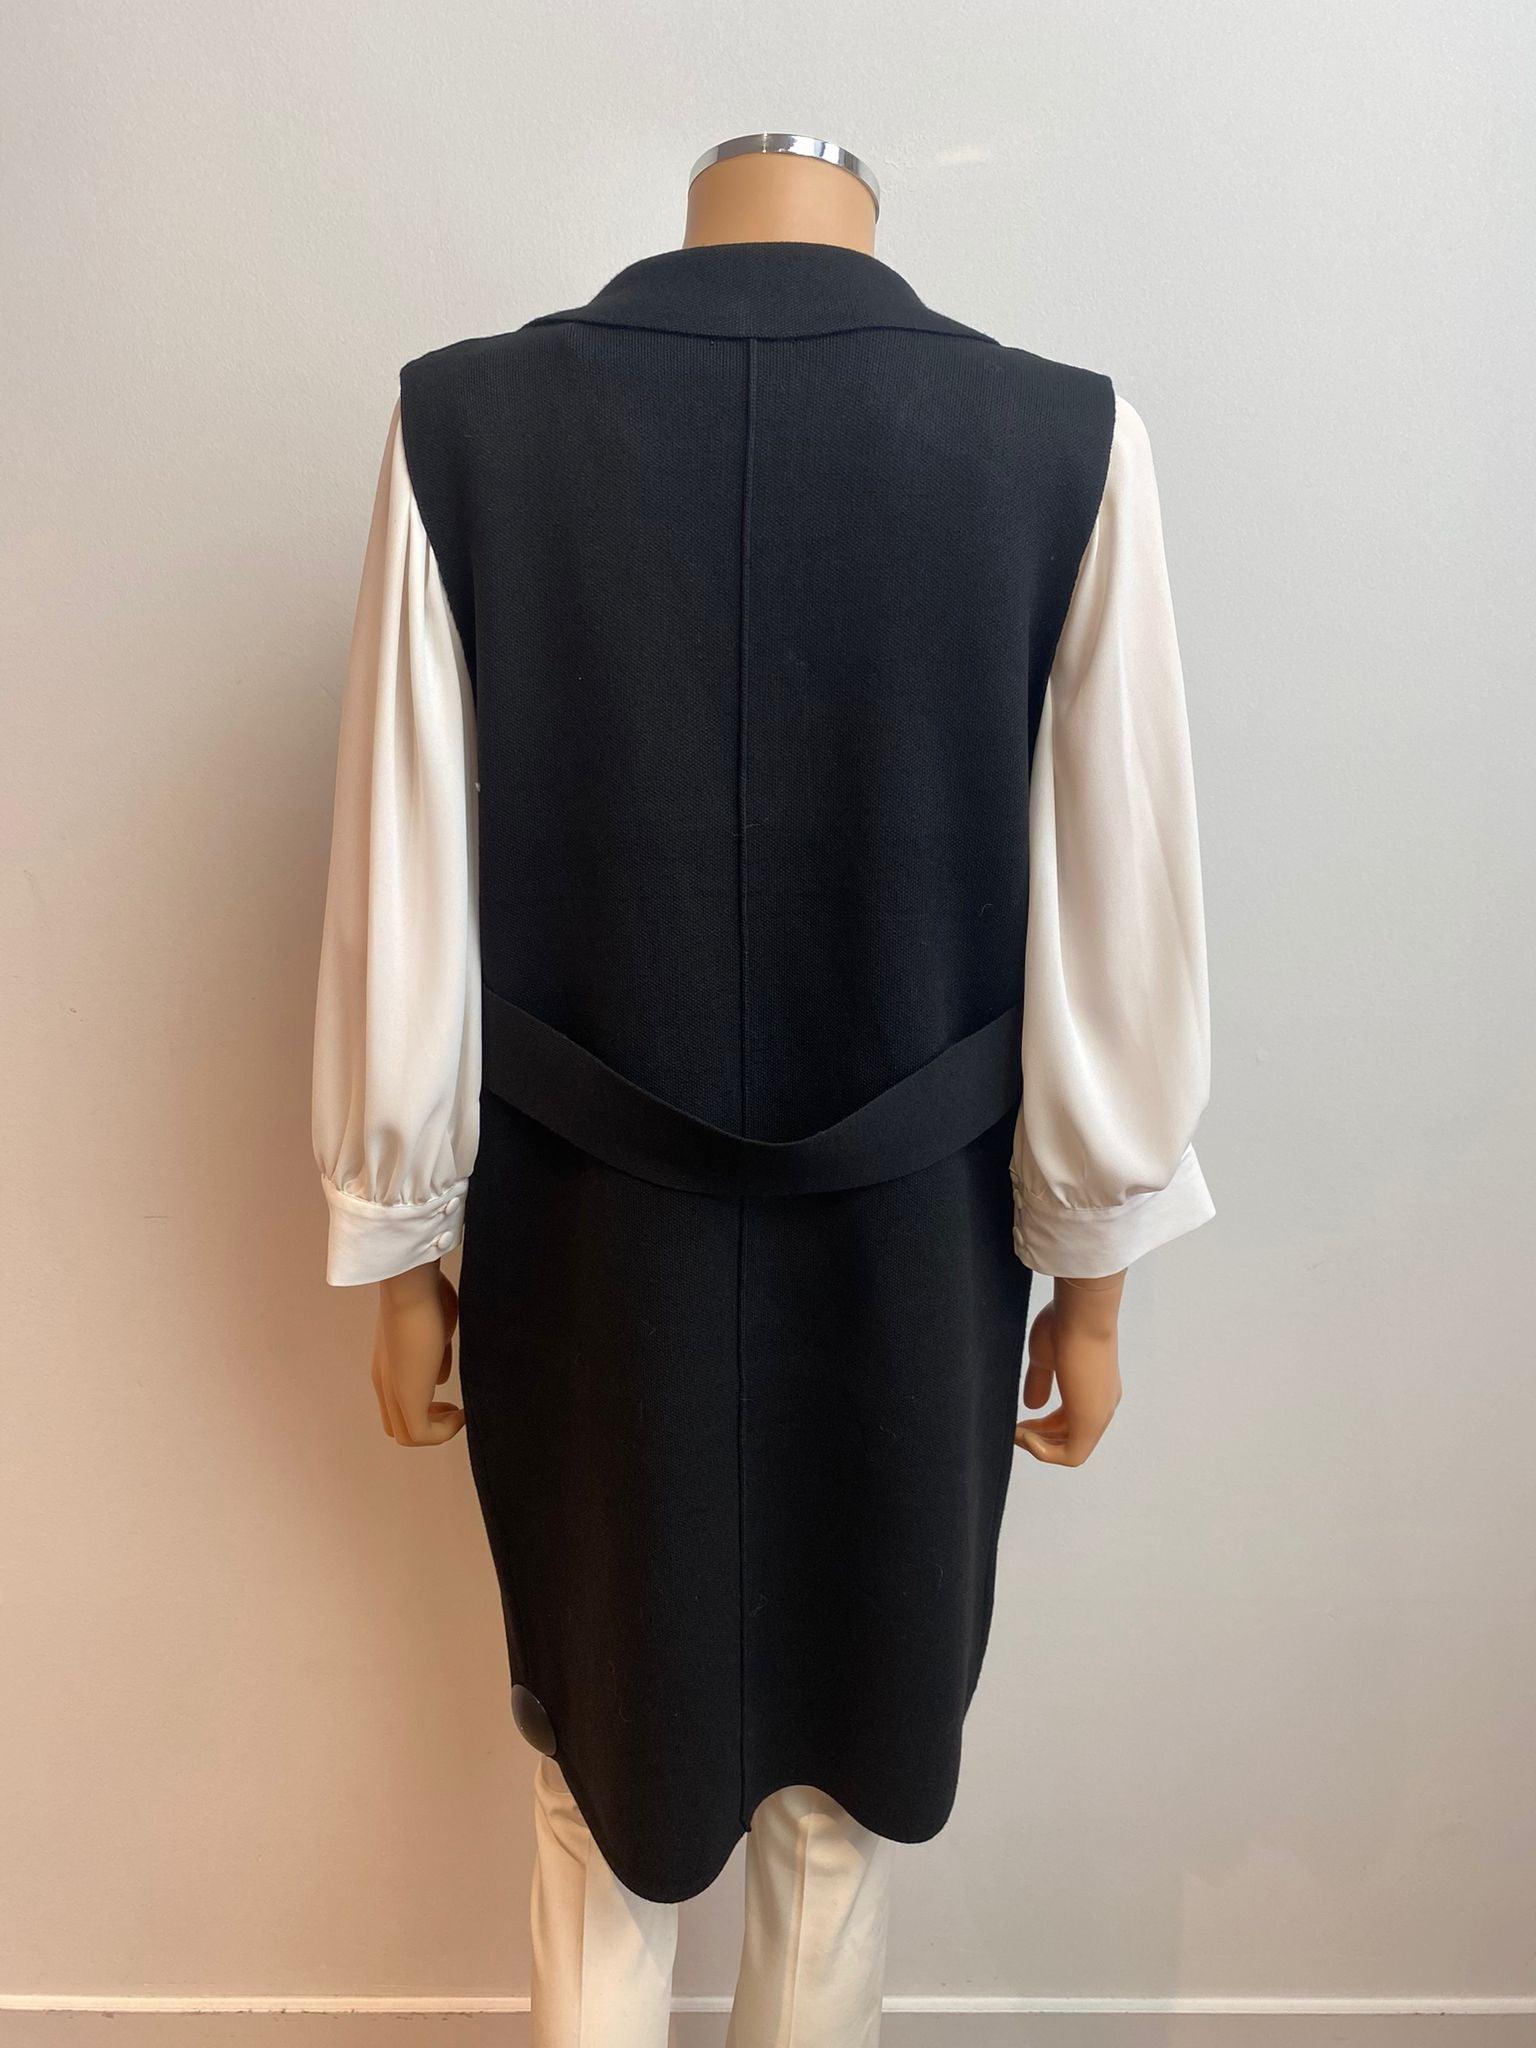 Giletvest Zwart Senso ( 9348 Philma Black ) - Delaere Womenswear